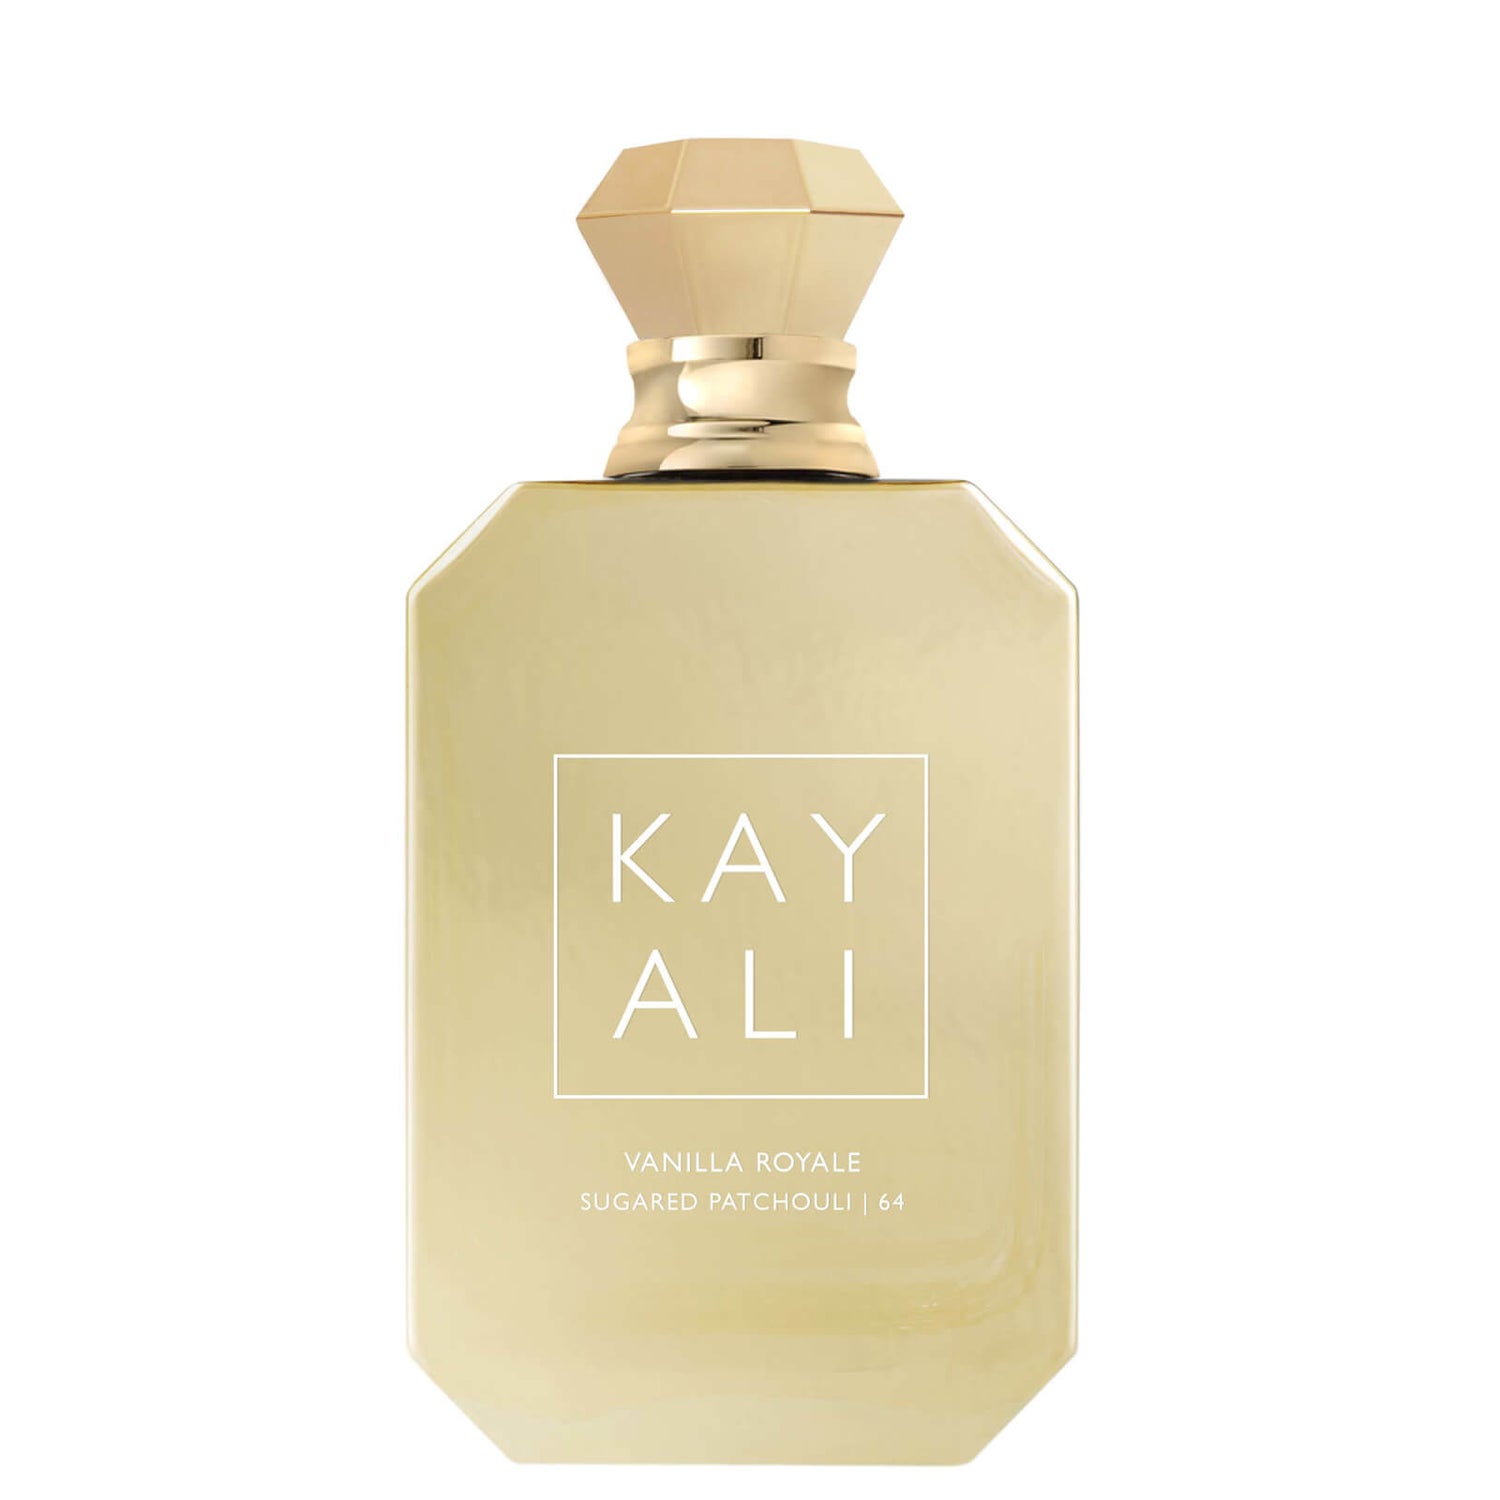 KAYALI Vanilla Royale Sugared Patchouli 64 Eau de Parfum Intense - 50ml ...